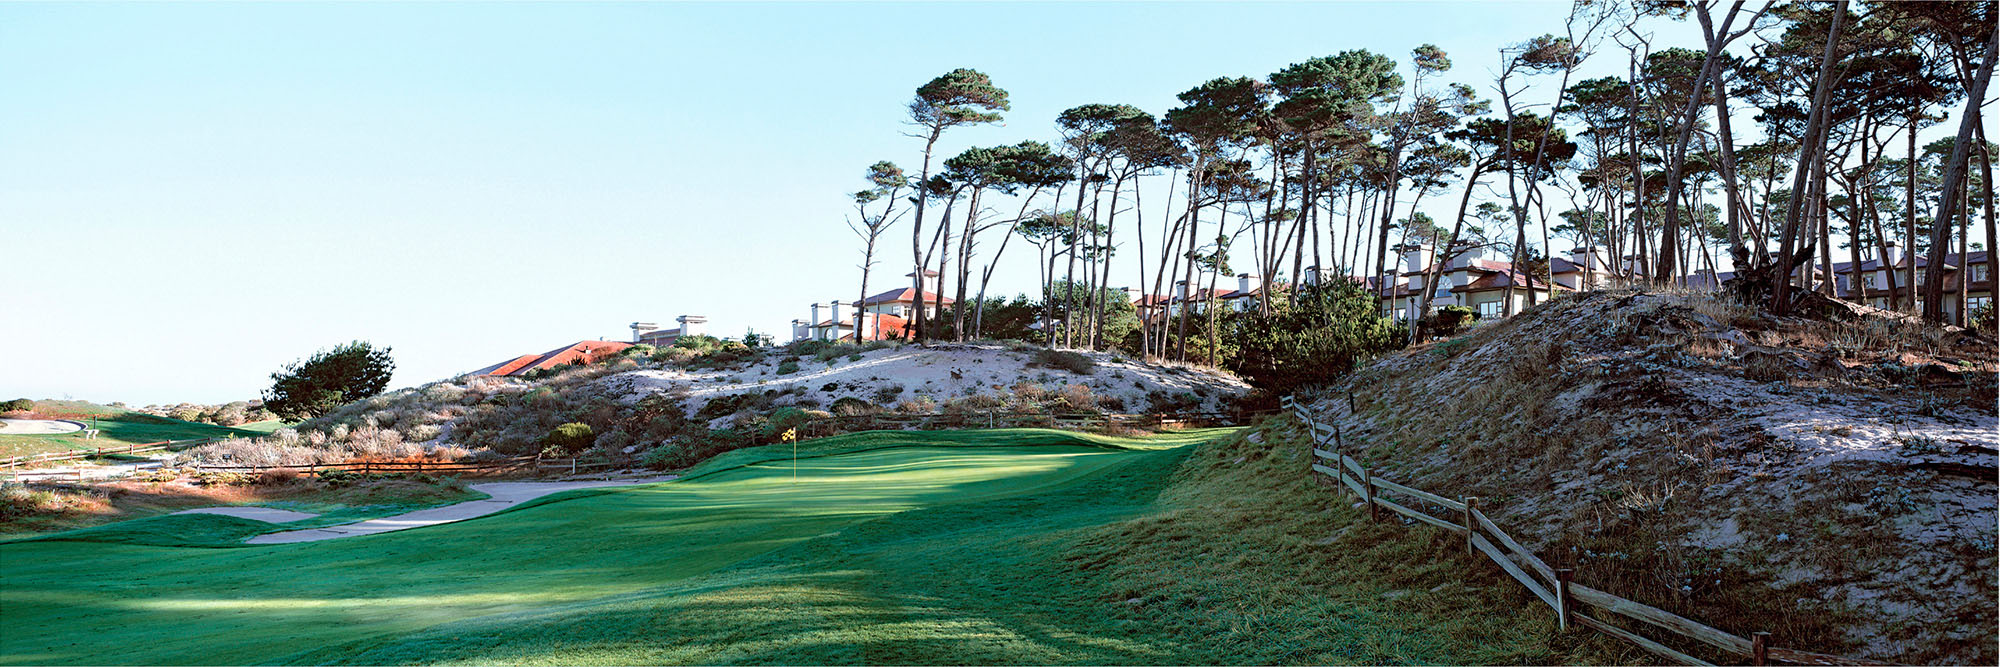 Golf Course Image - Spanish Bay No. 4